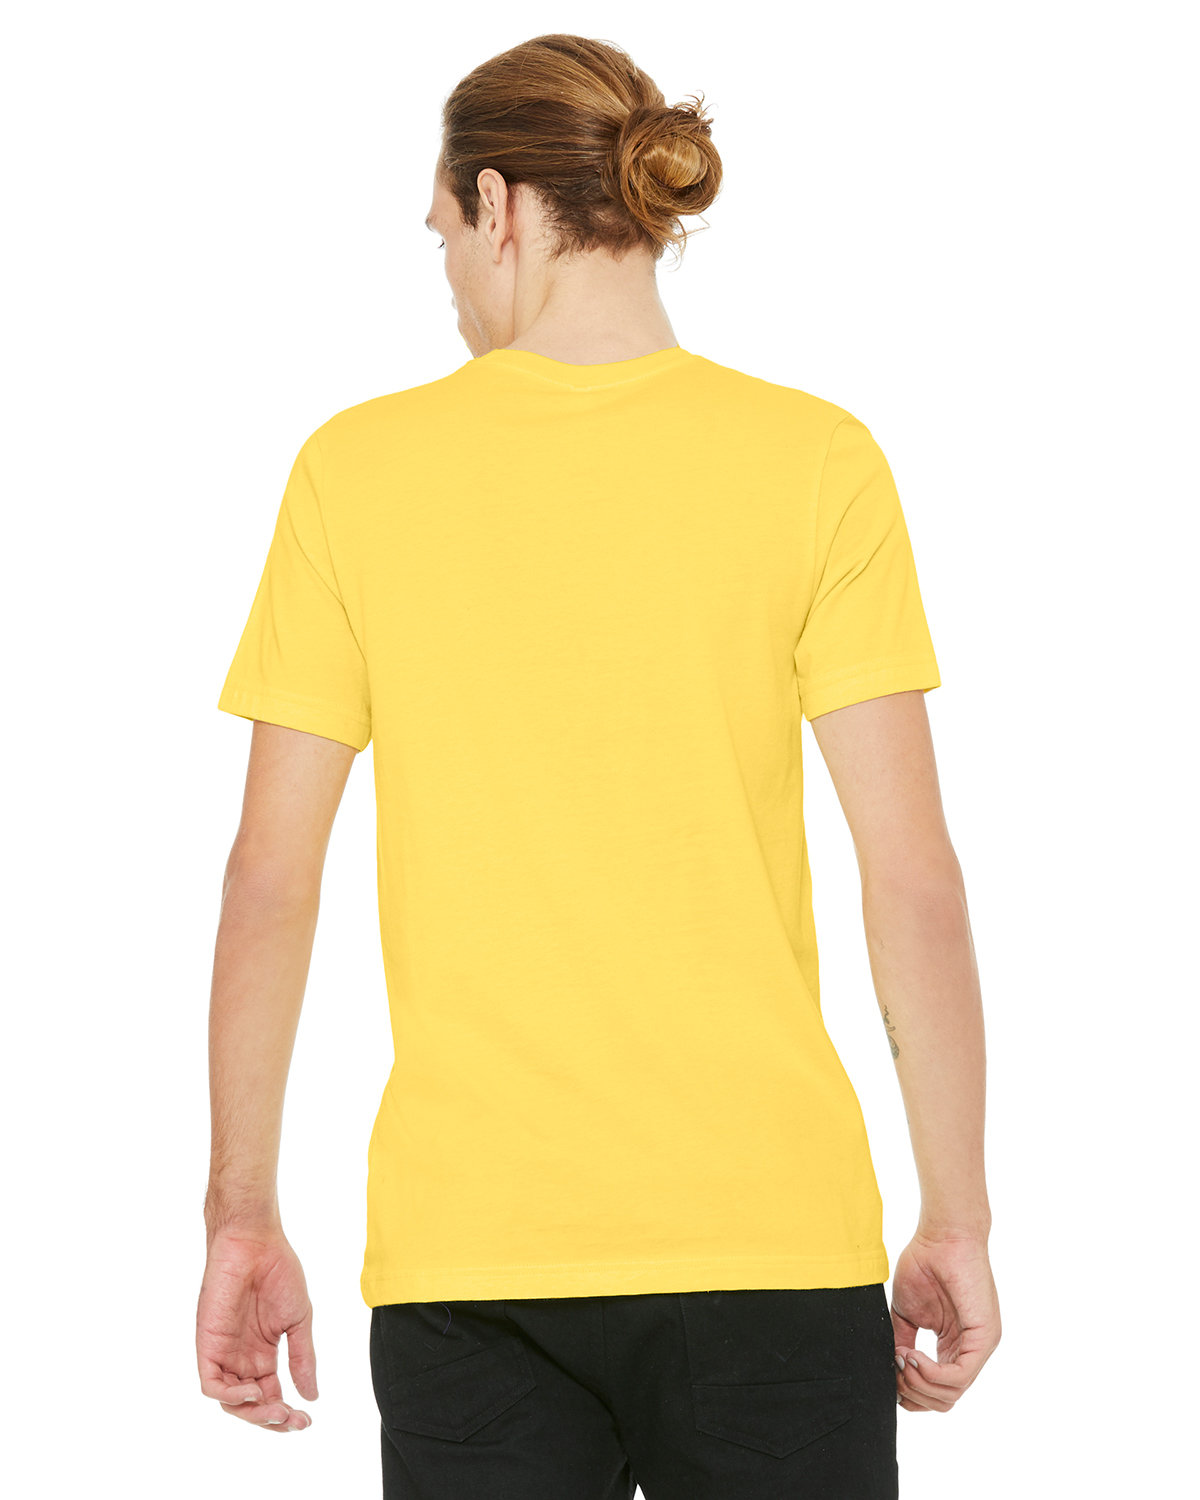 Bella + Canvas Unisex Jersey T-Shirt | Generic Site - Priced